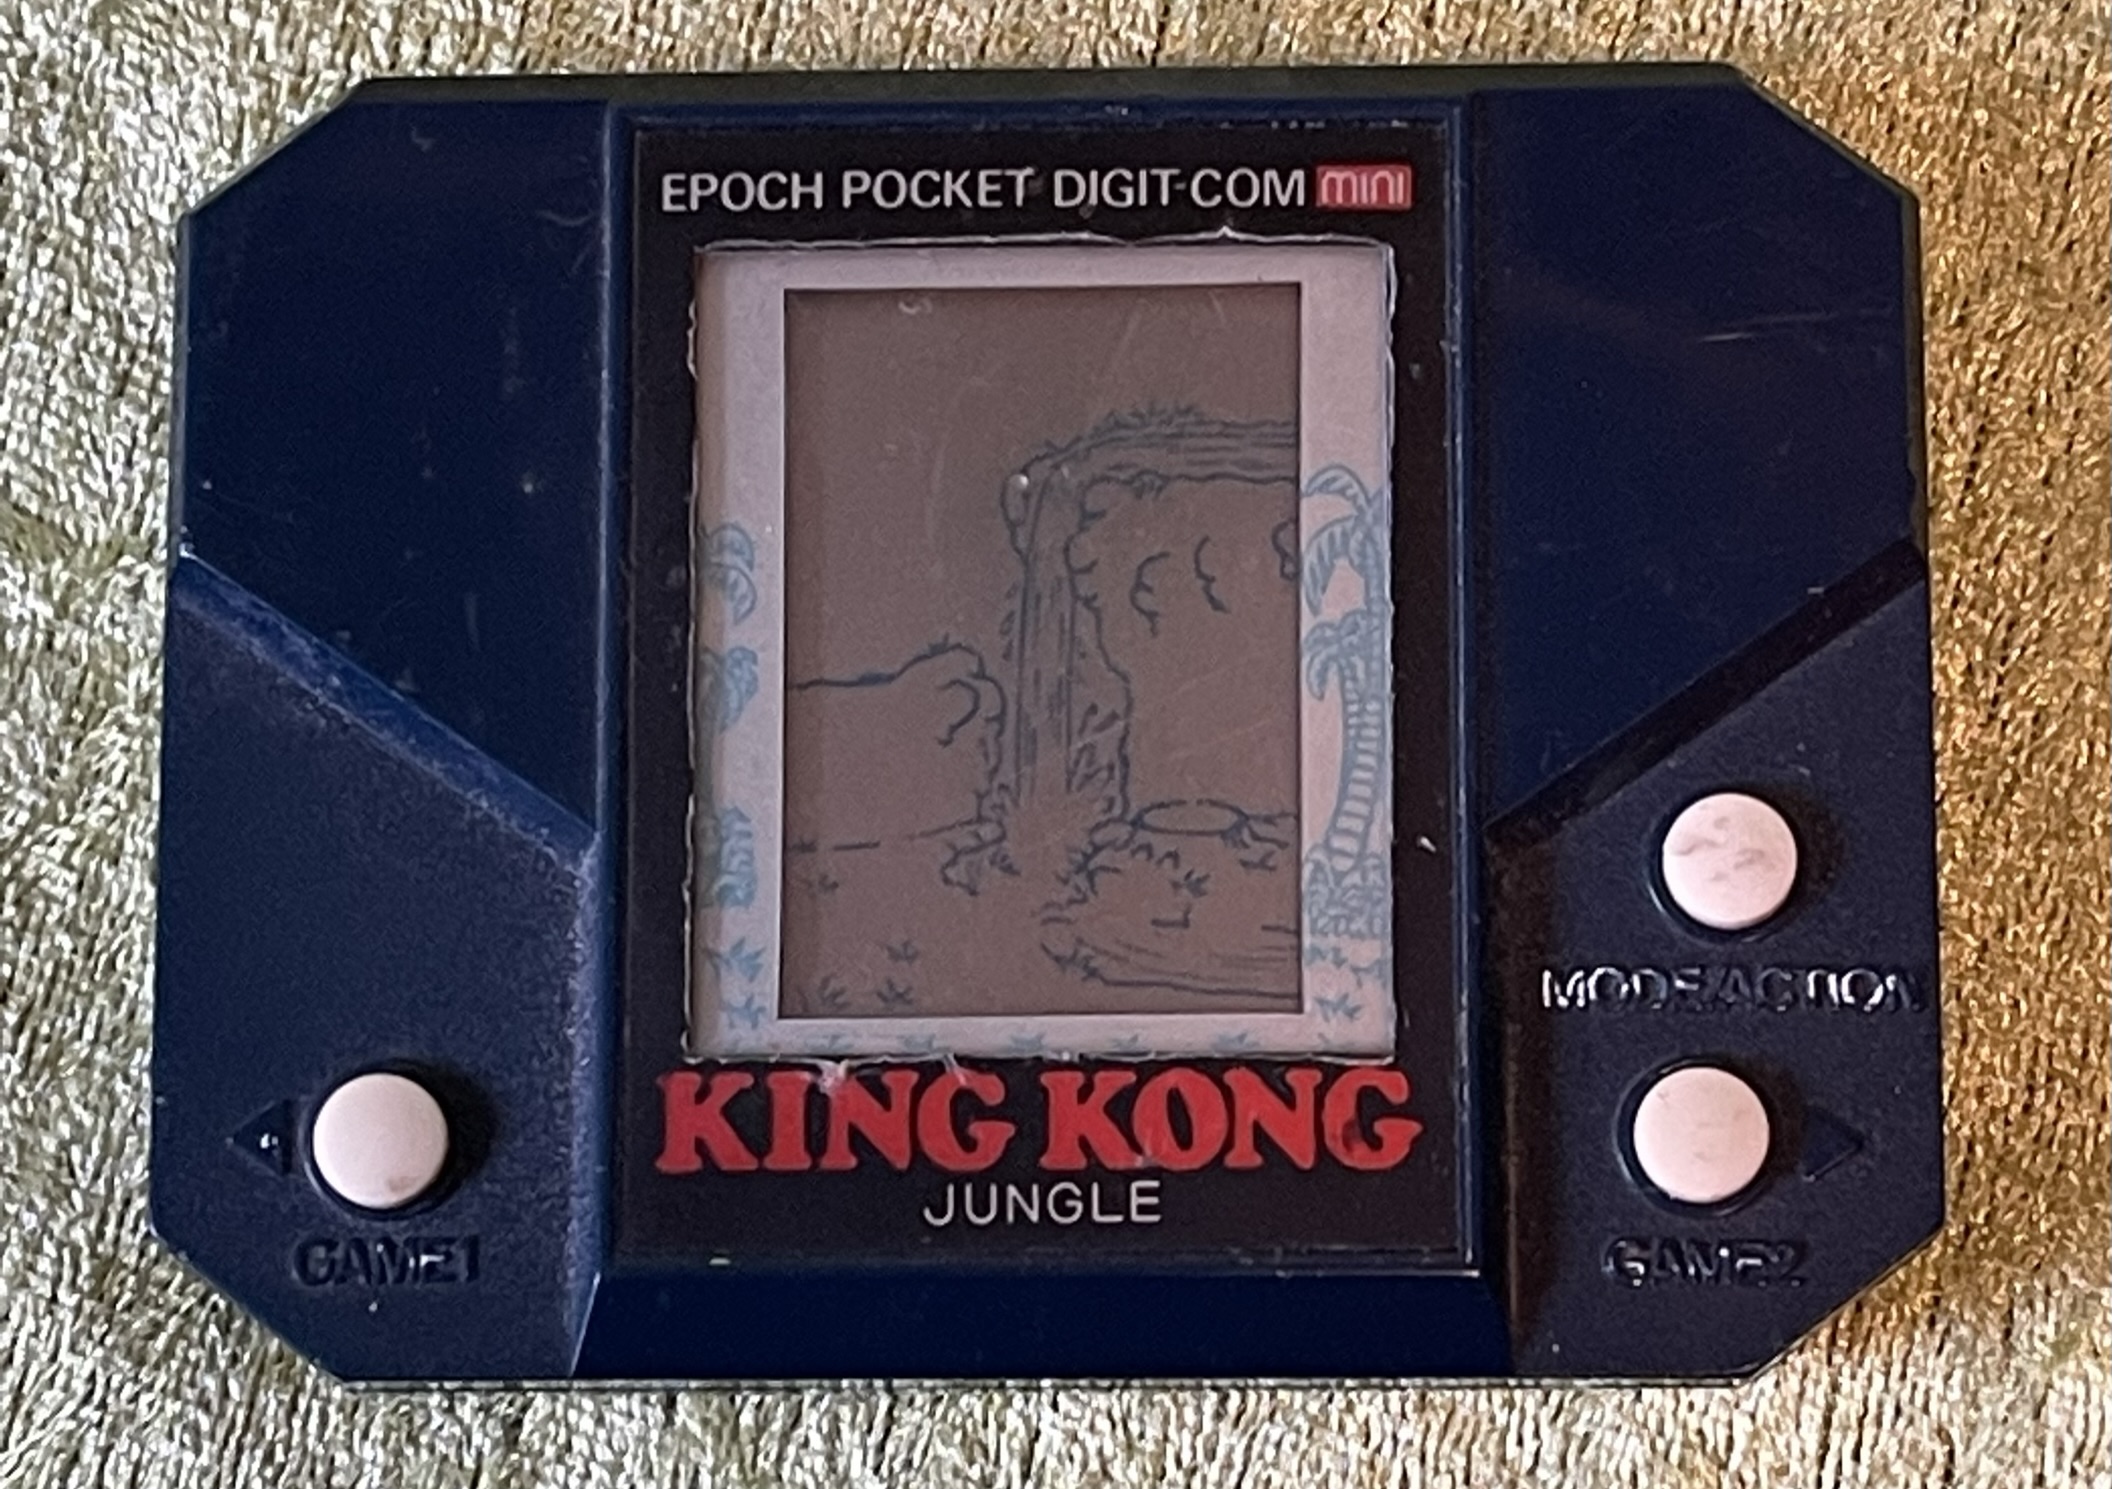 Epoch Pocket Digit-Com Mini